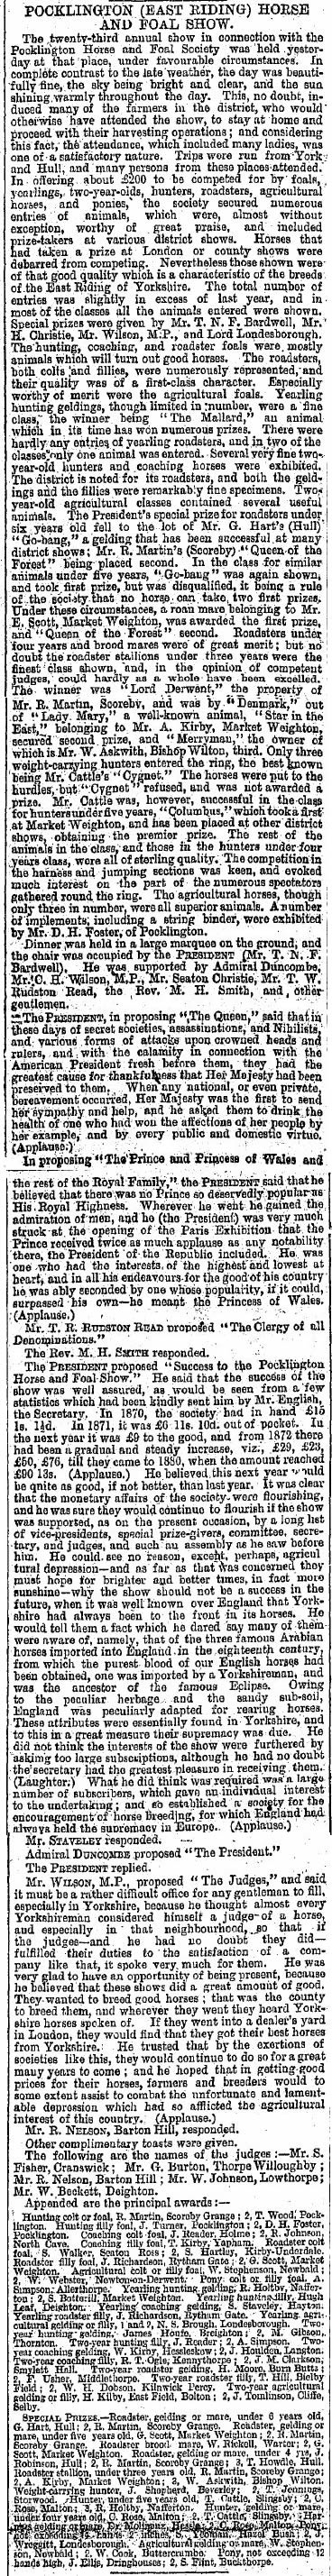 1881 Pocklington Horse & Foal Show